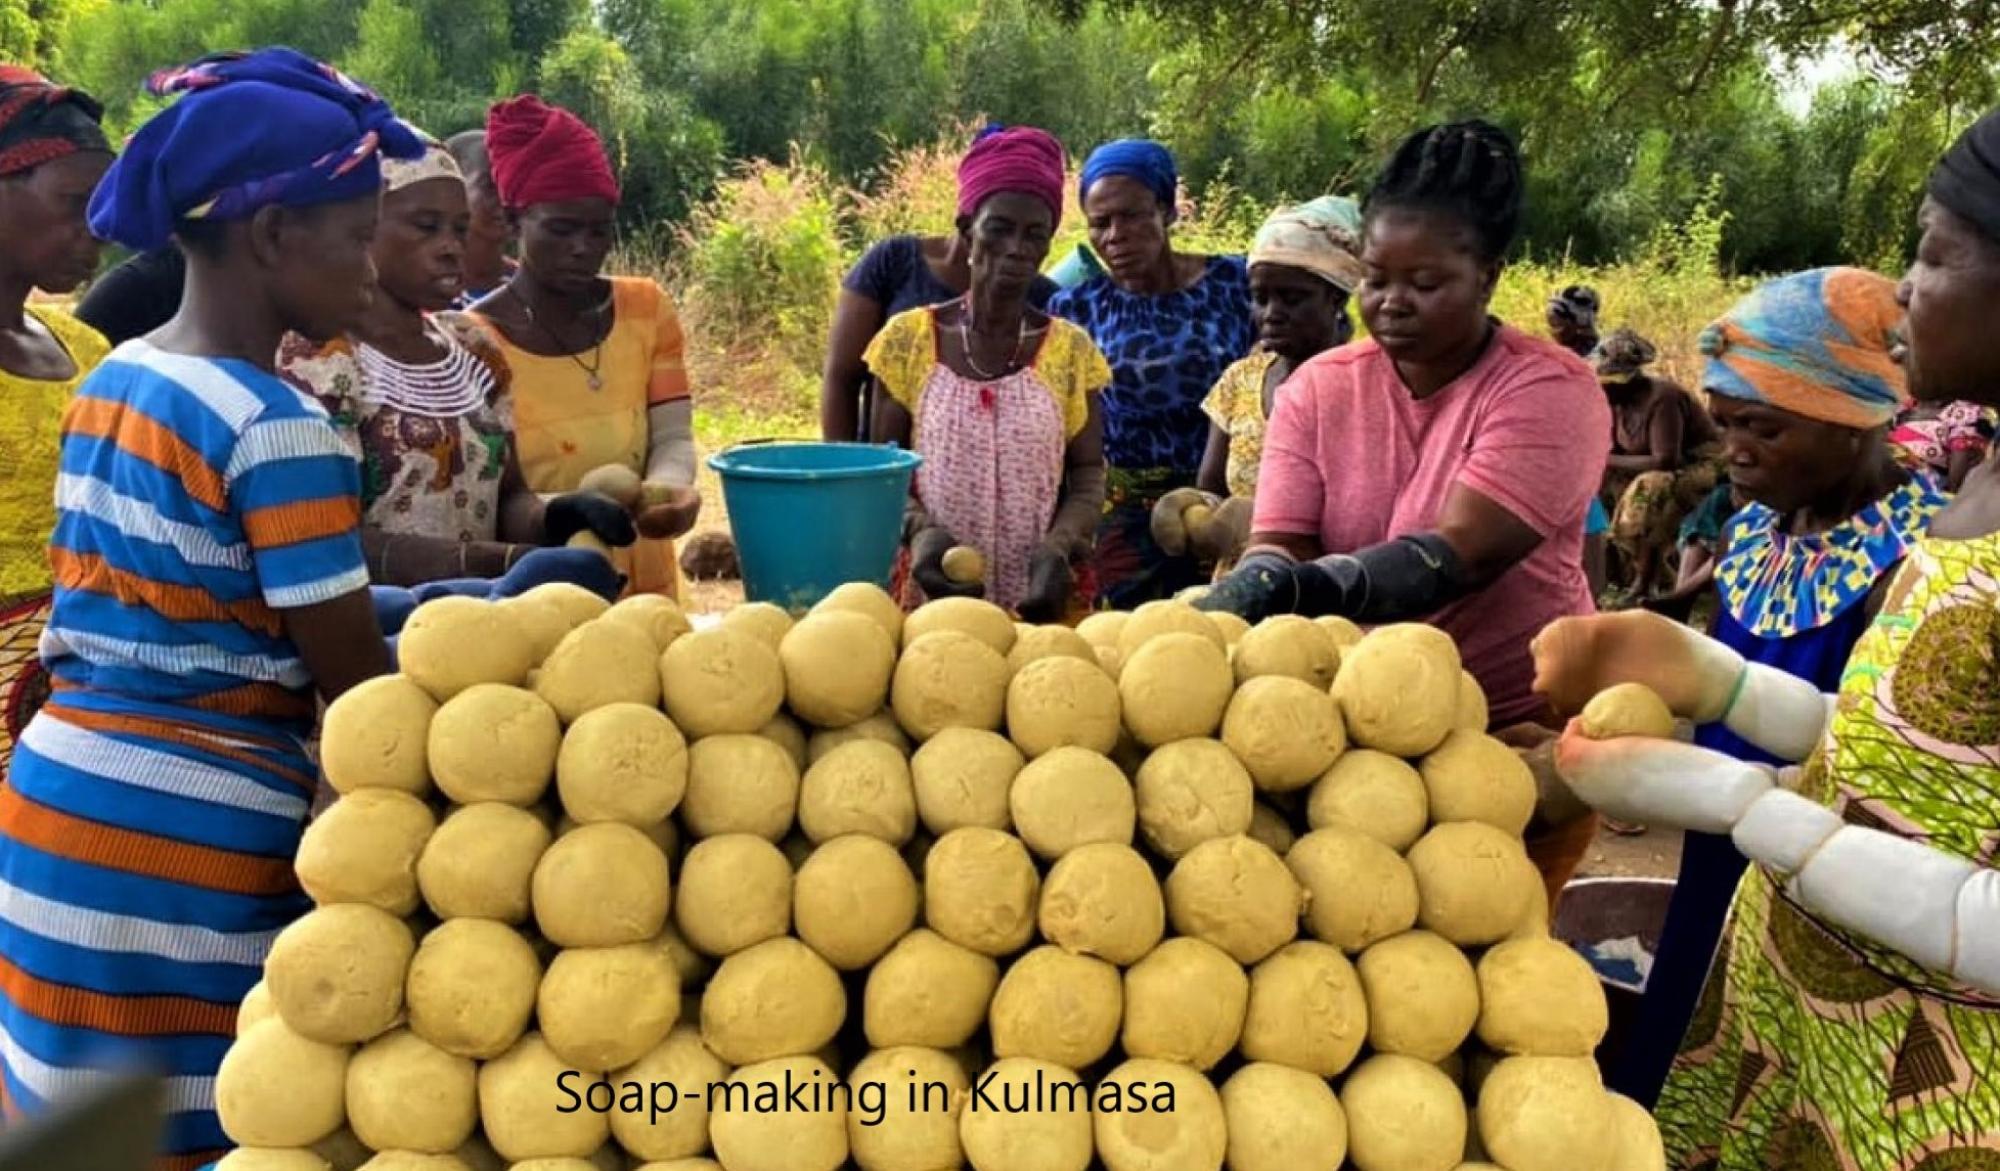 Kulmasa Women's Group prepare to make soap